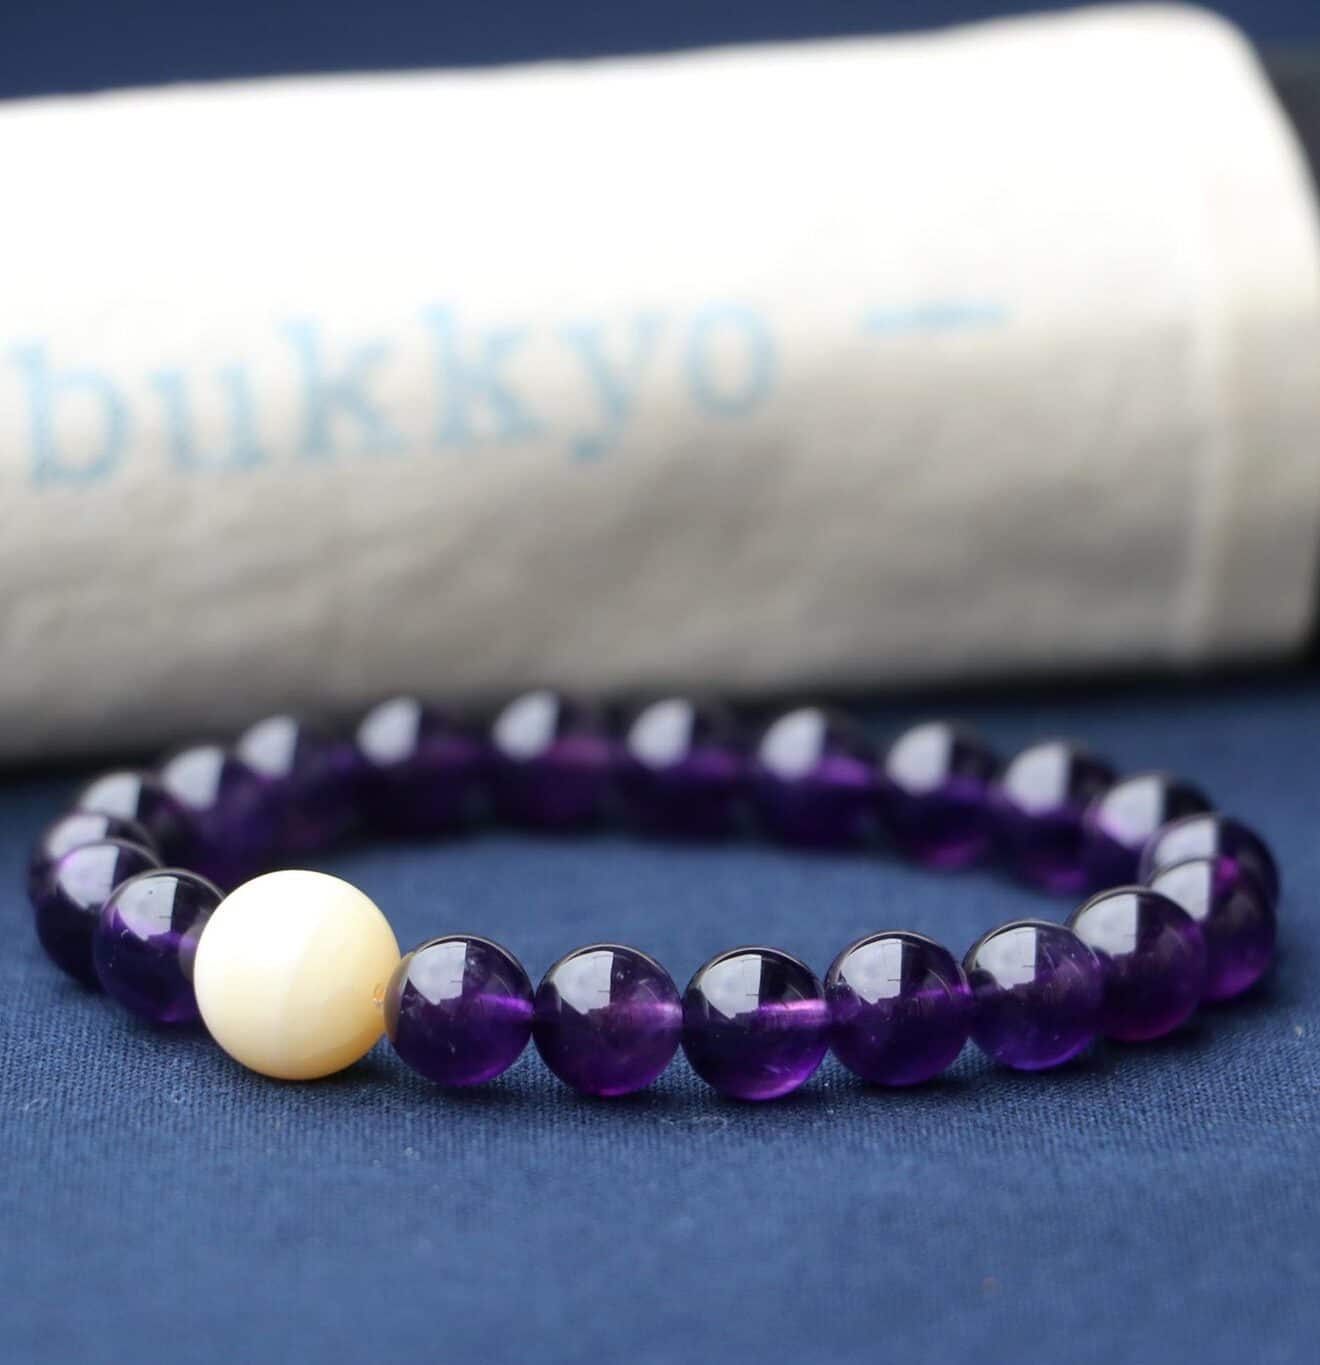 TIBUKKYO Taiwan Derong Collection｜Raw undyed amethyst bracelet 8mm round beads｜Filigree beeswax Tridacna｜Customized Buddha bead design